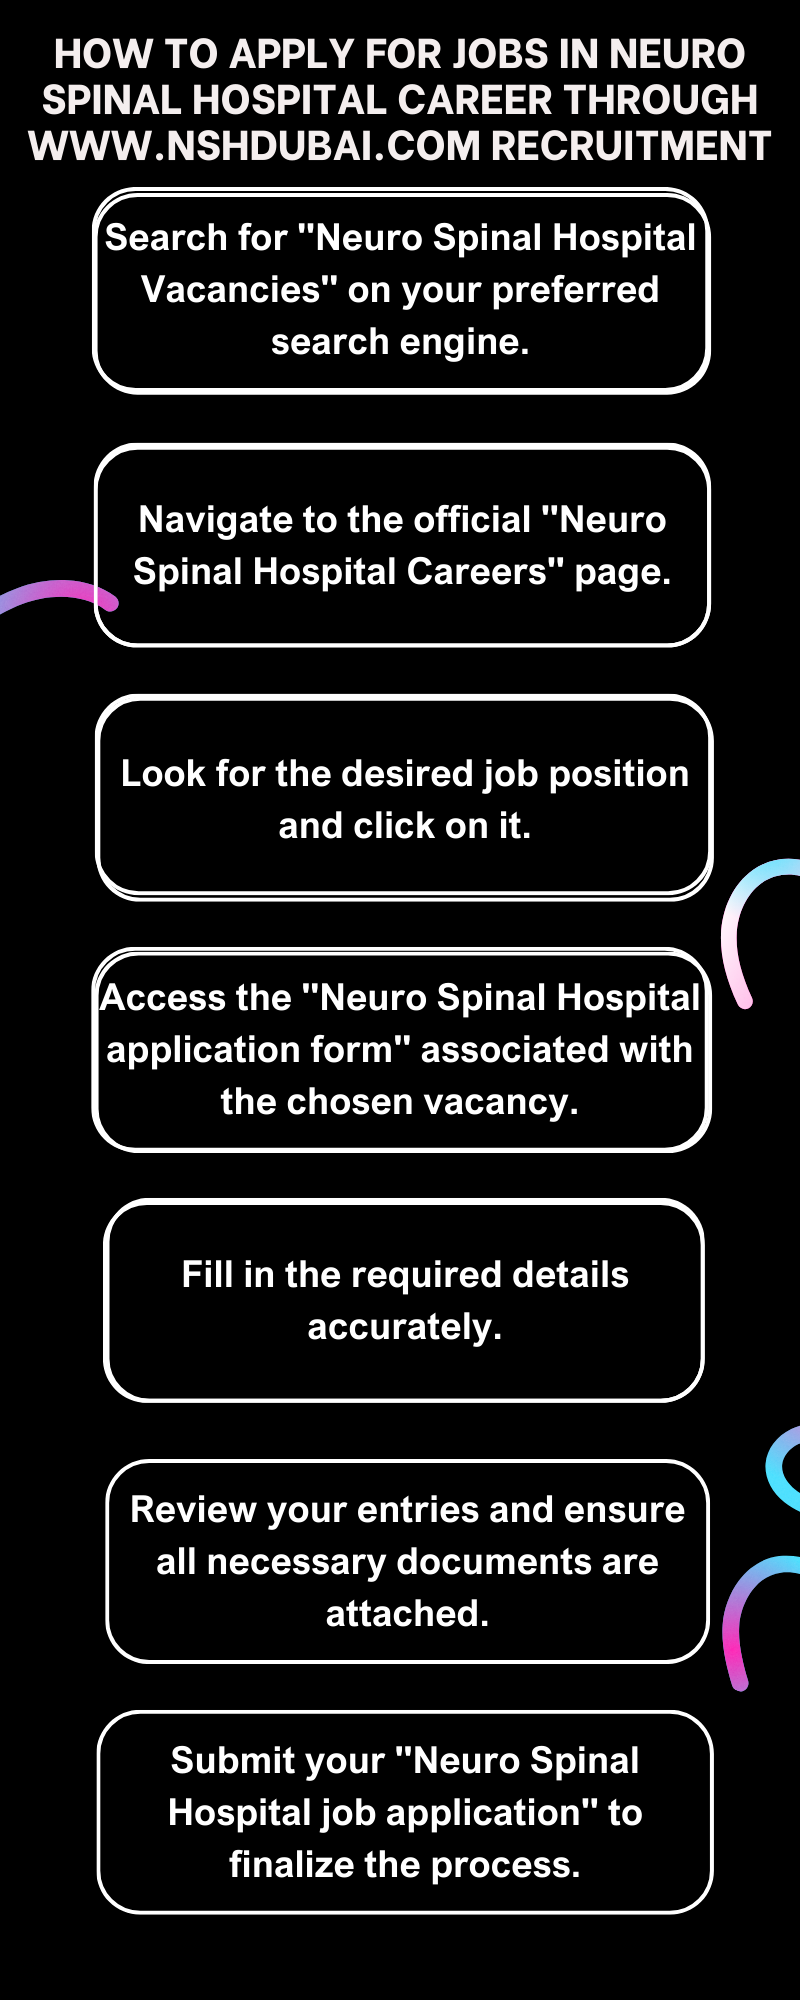 How to Apply for Jobs in Neuro Spinal Hospital Career through www.nshdubai.com recruitment?